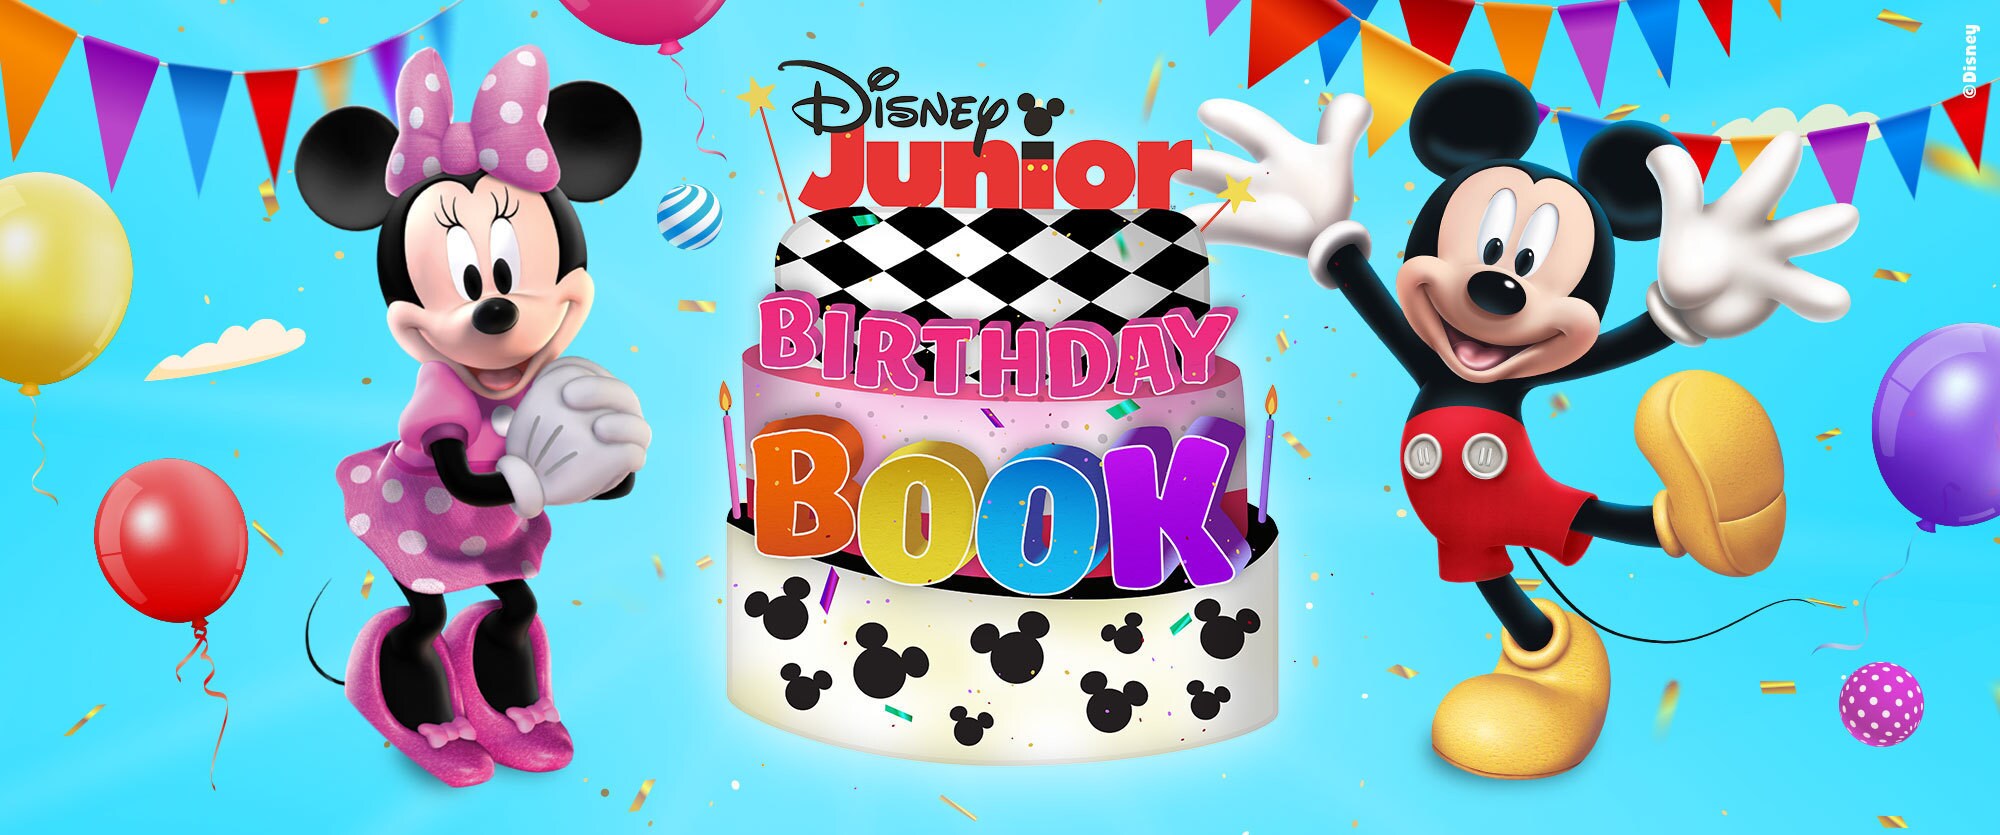 Birthday Book Top | Disney Junior Birthday Book